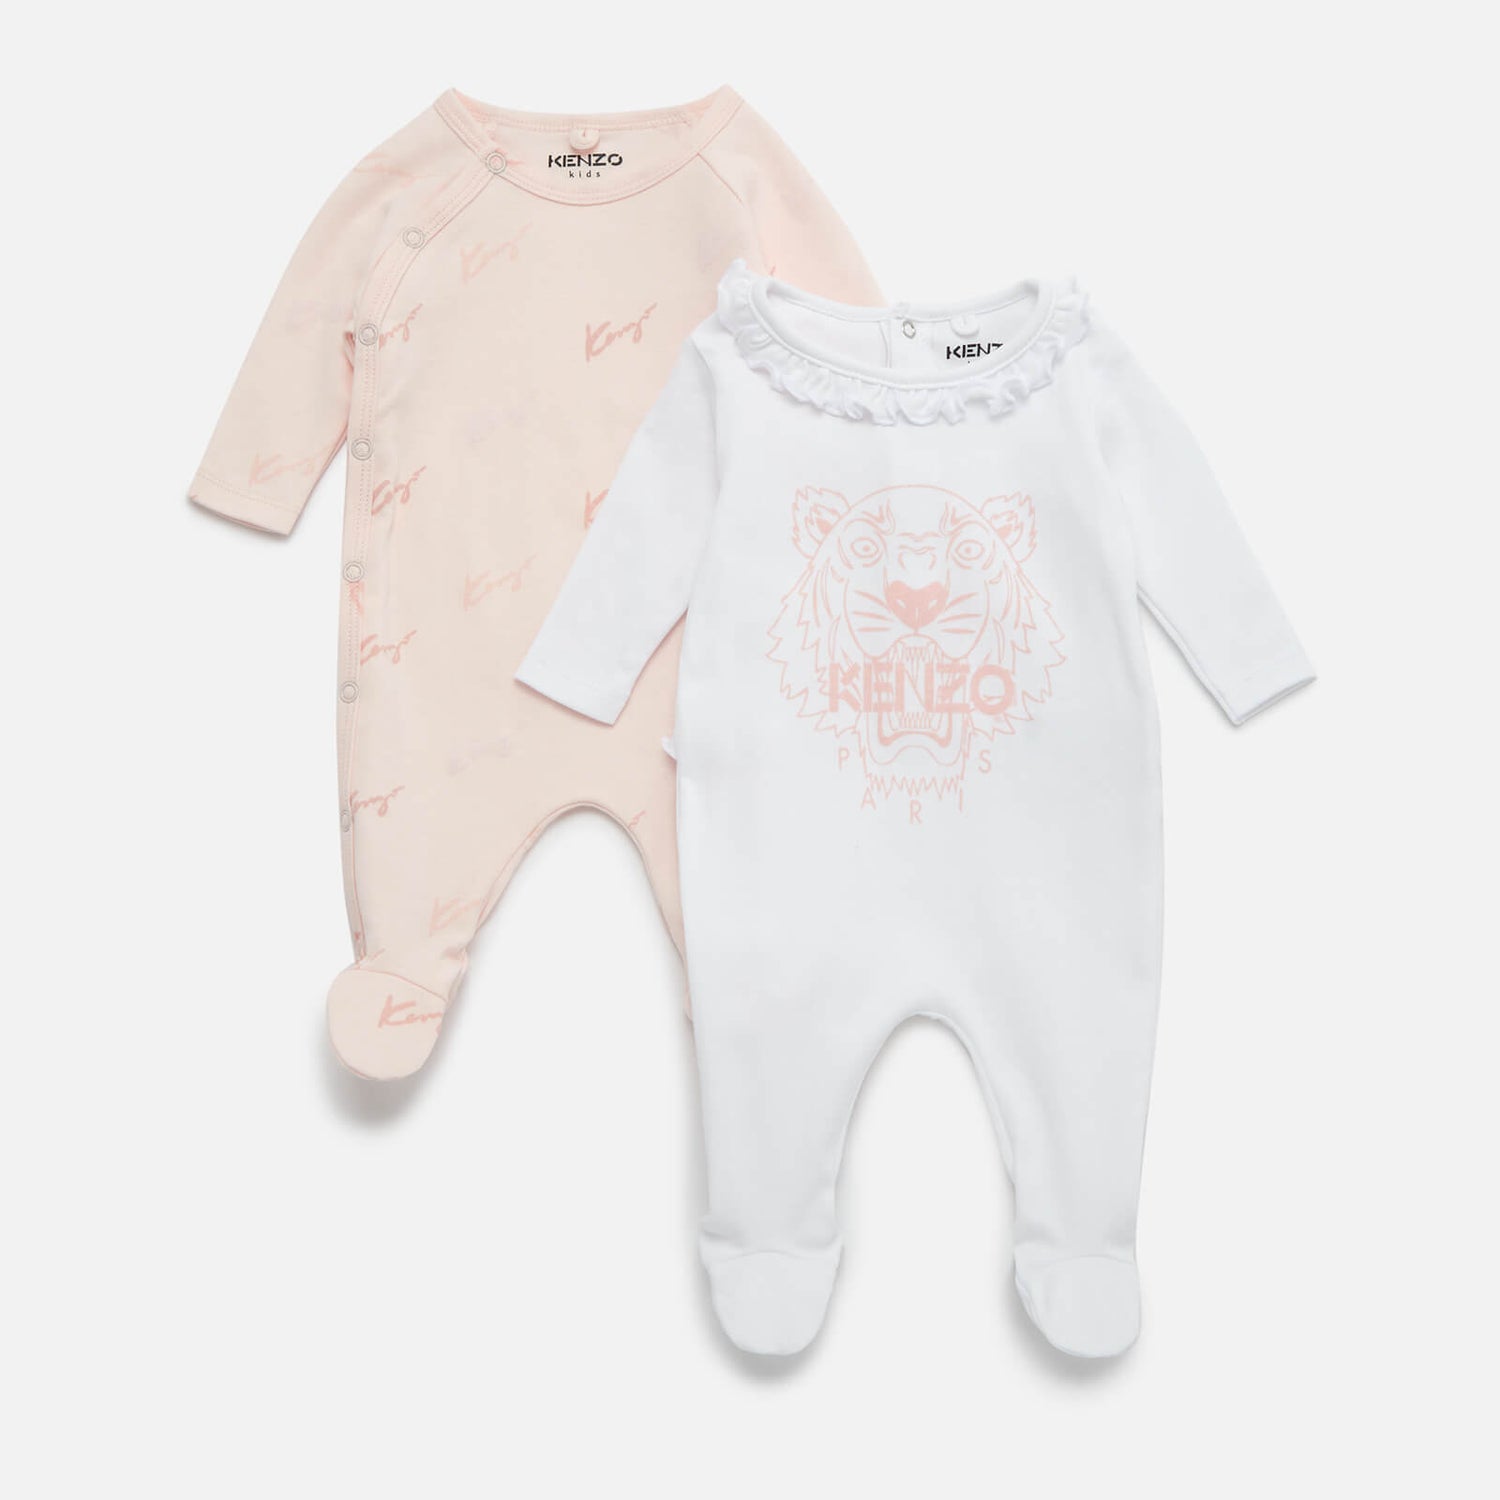 KENZO Newborn Set Of 2 Sleepsuits - Pale Pink - 3-6 months